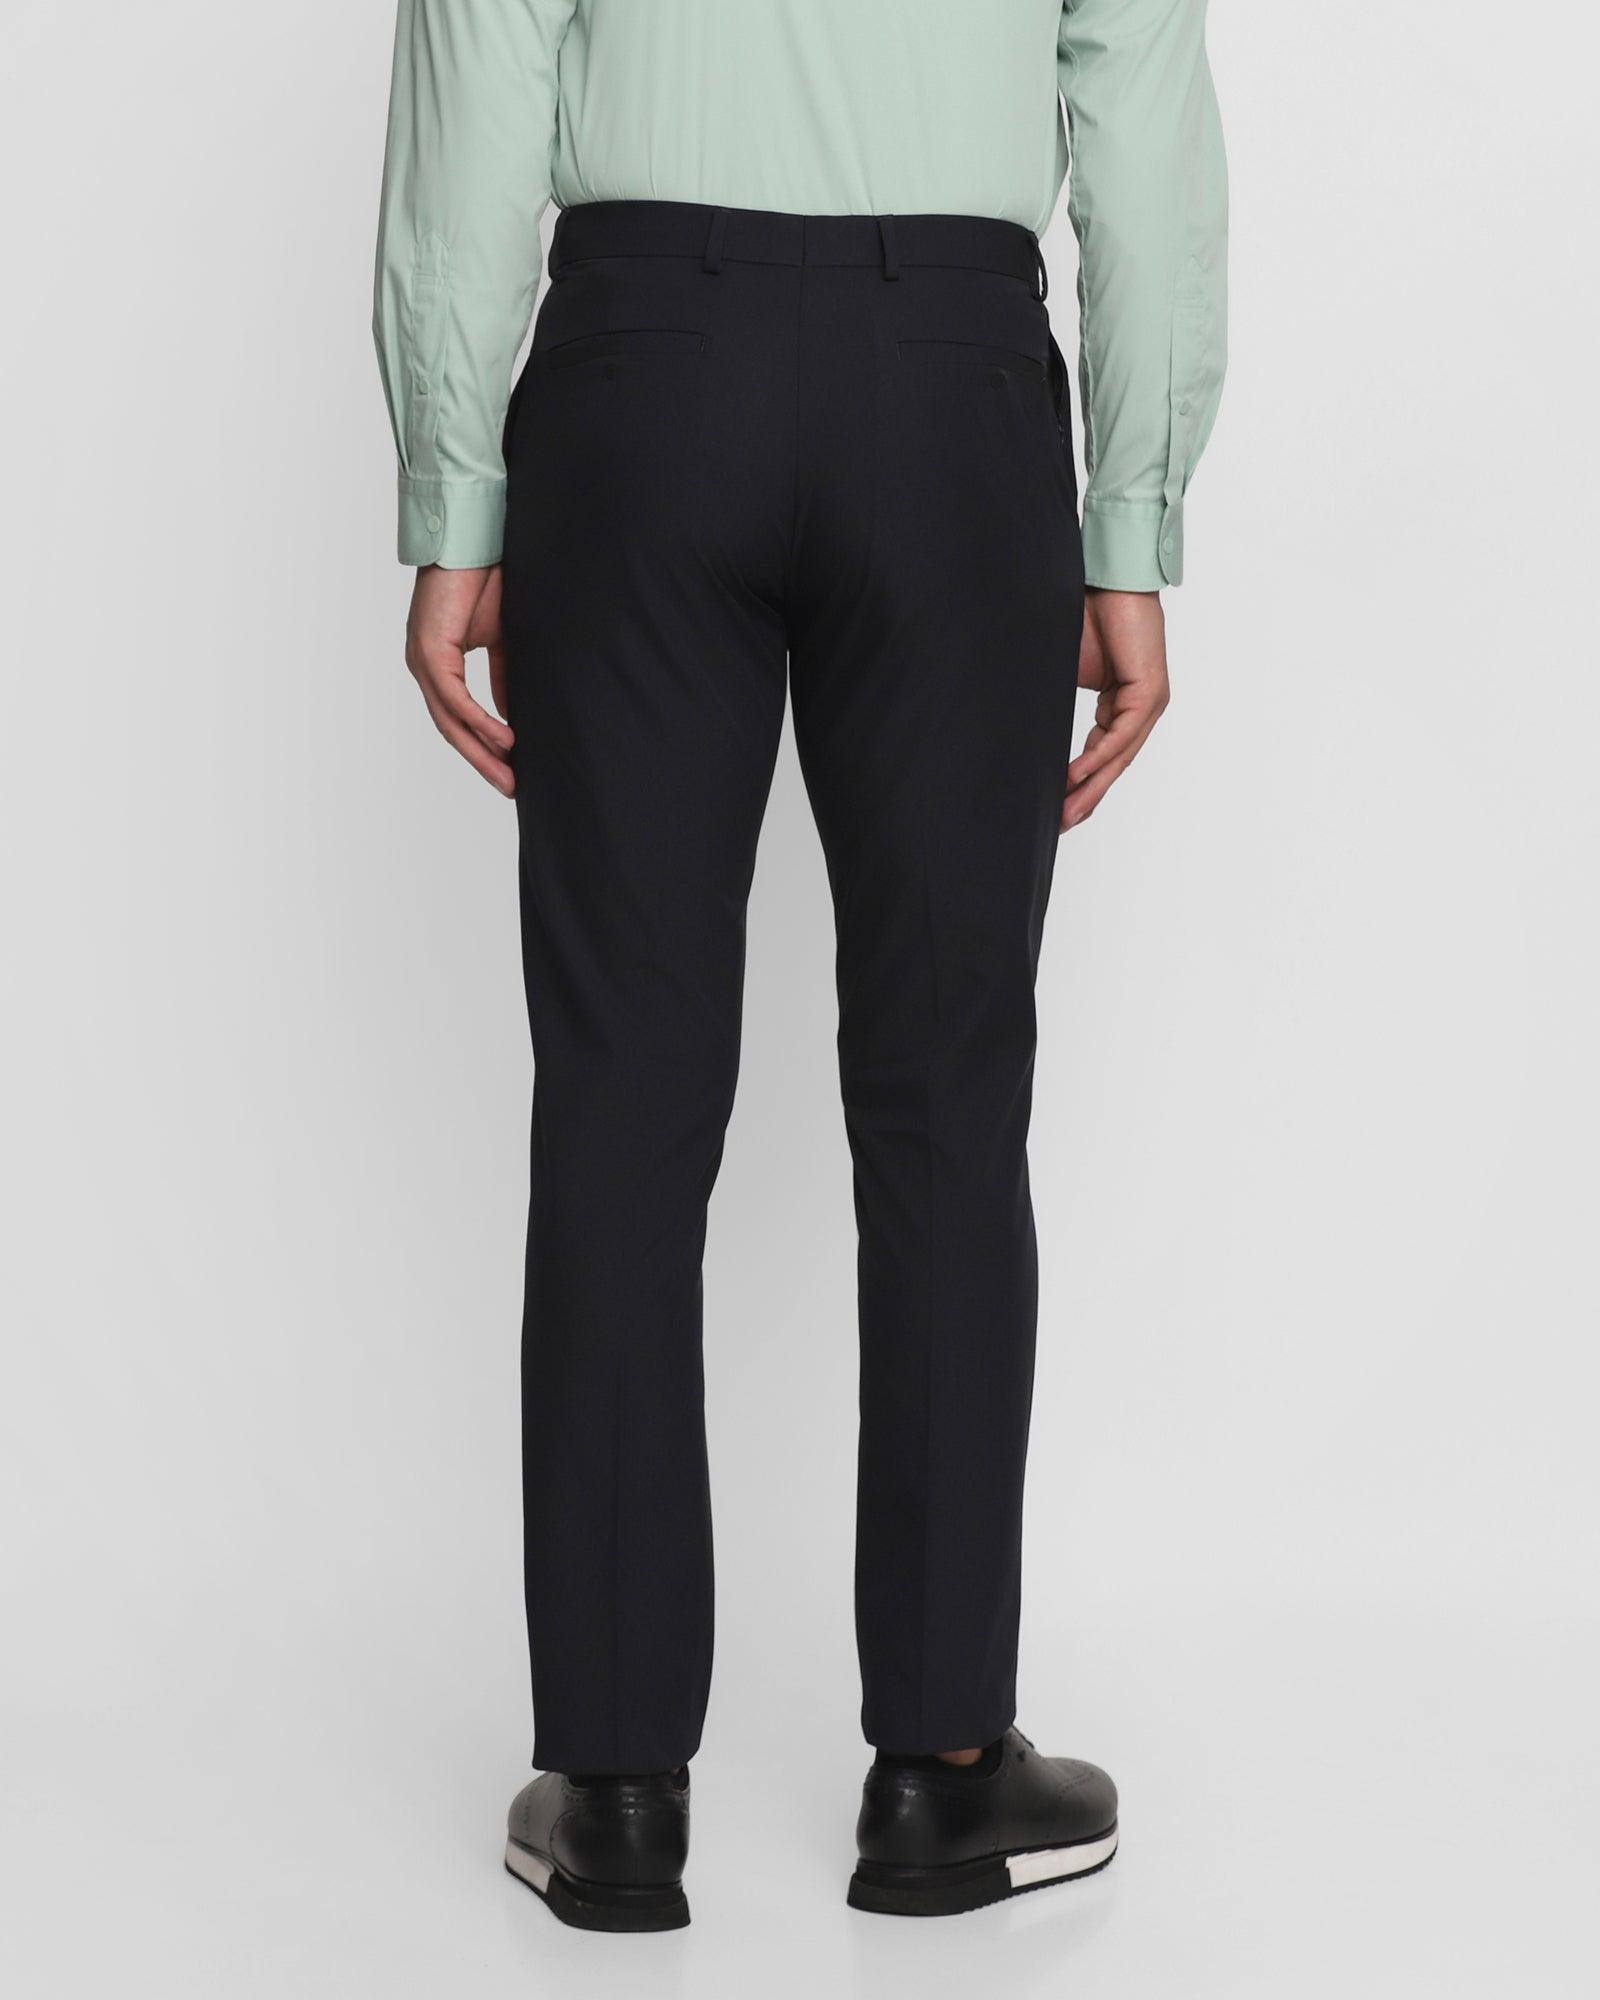 Formal Blackberry trousers